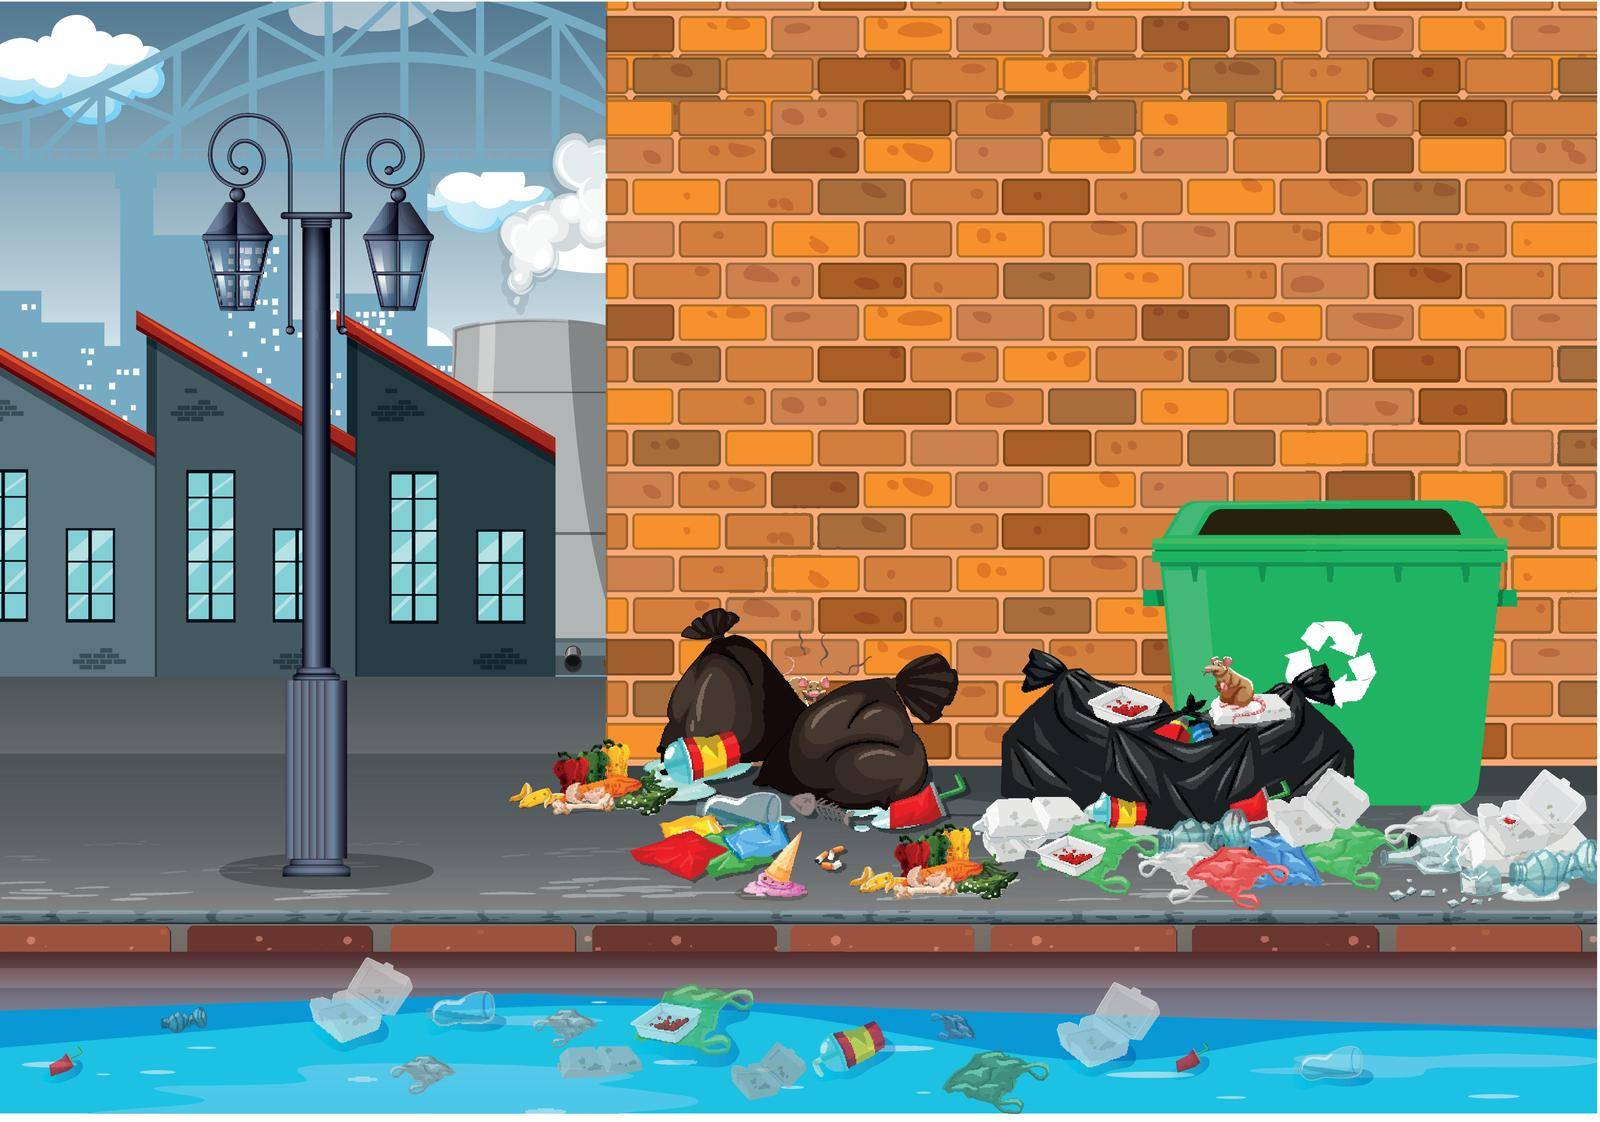 Litter in the industry landscape illustration